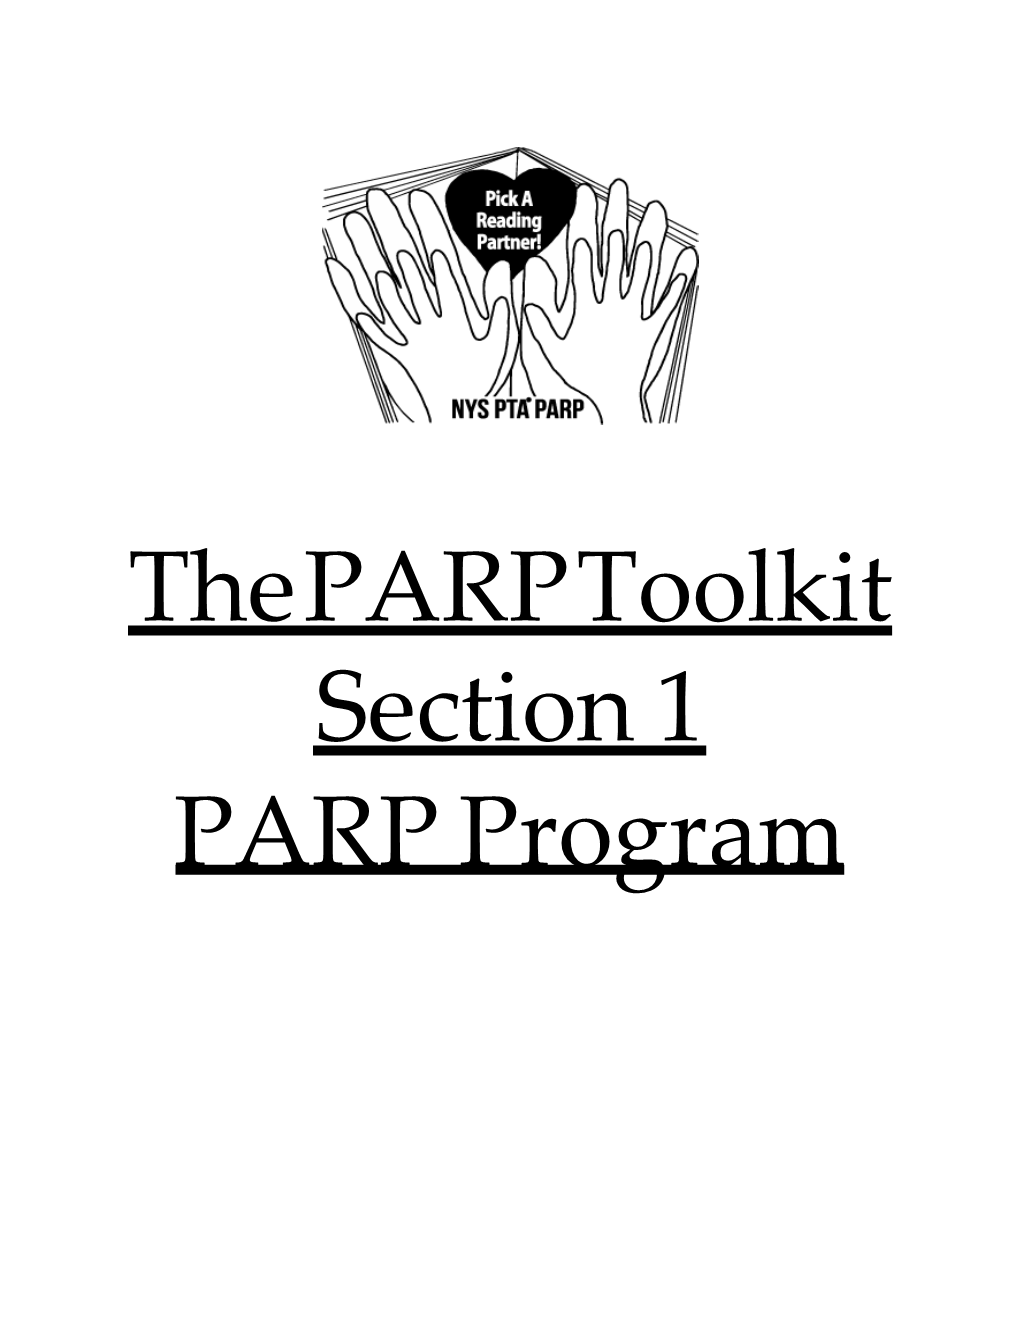 SECTION 1 – PARP Program